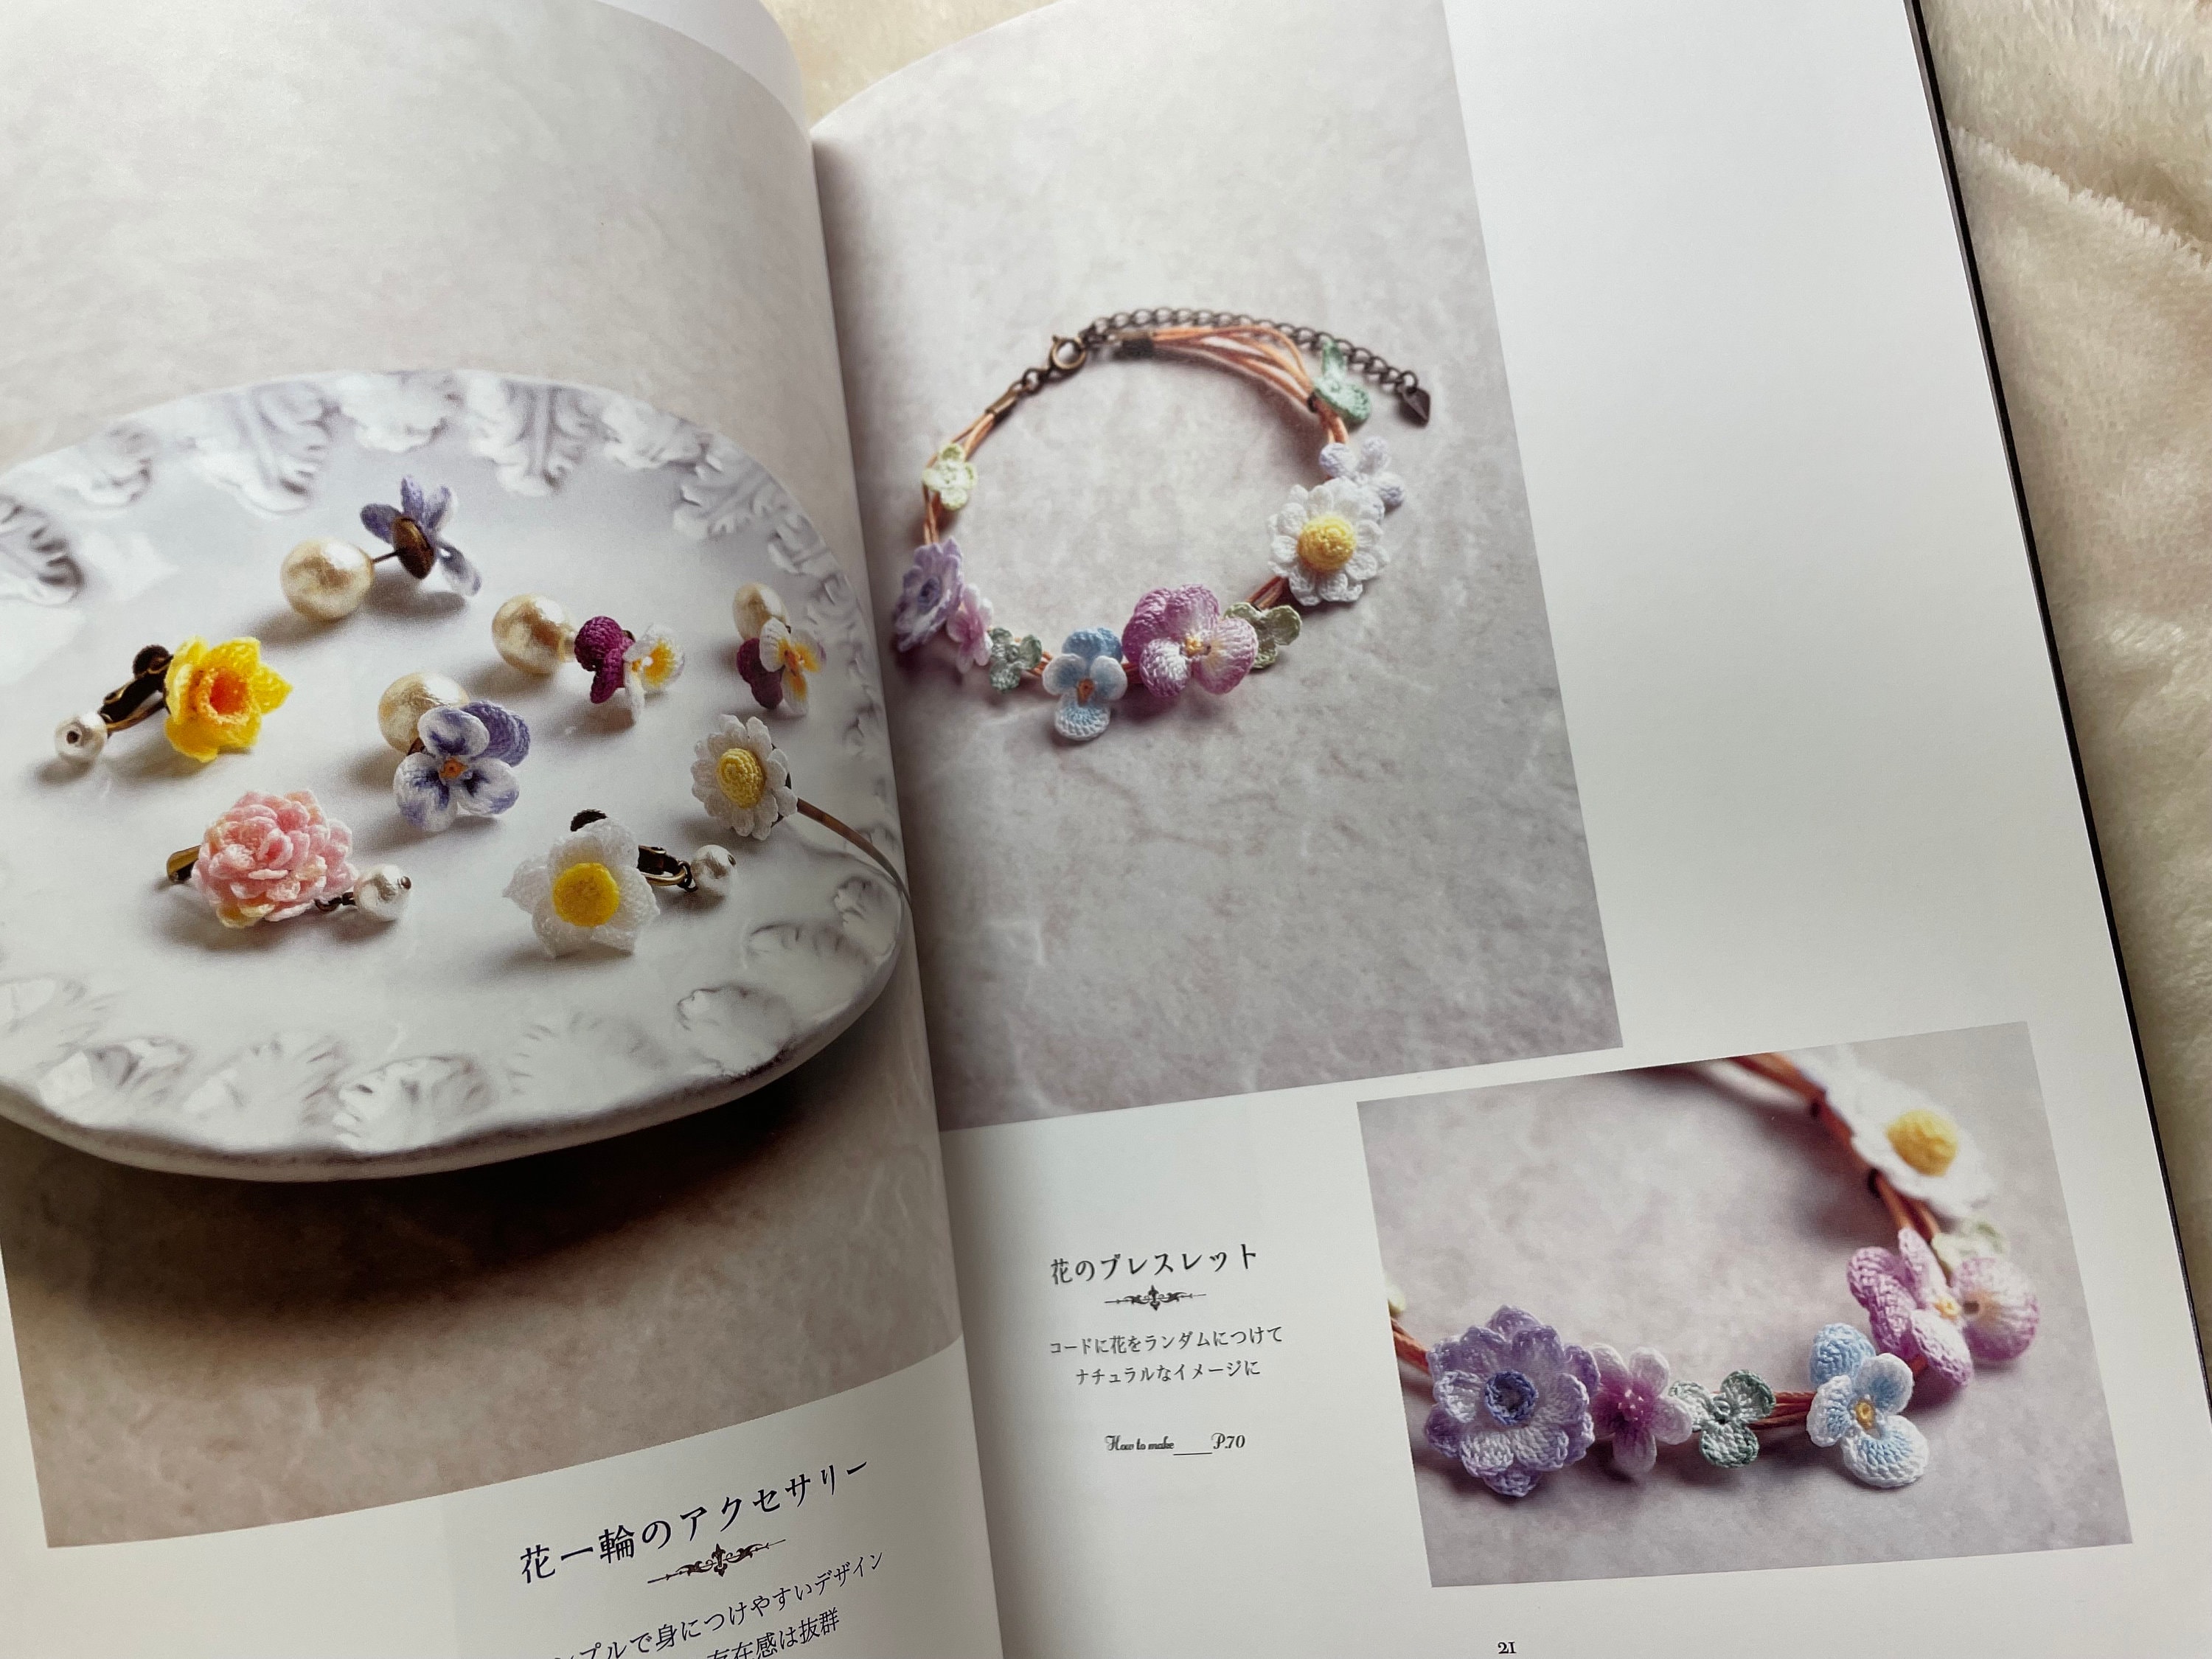 All-New Twenty to Make: Flowers to Crochet [Book]